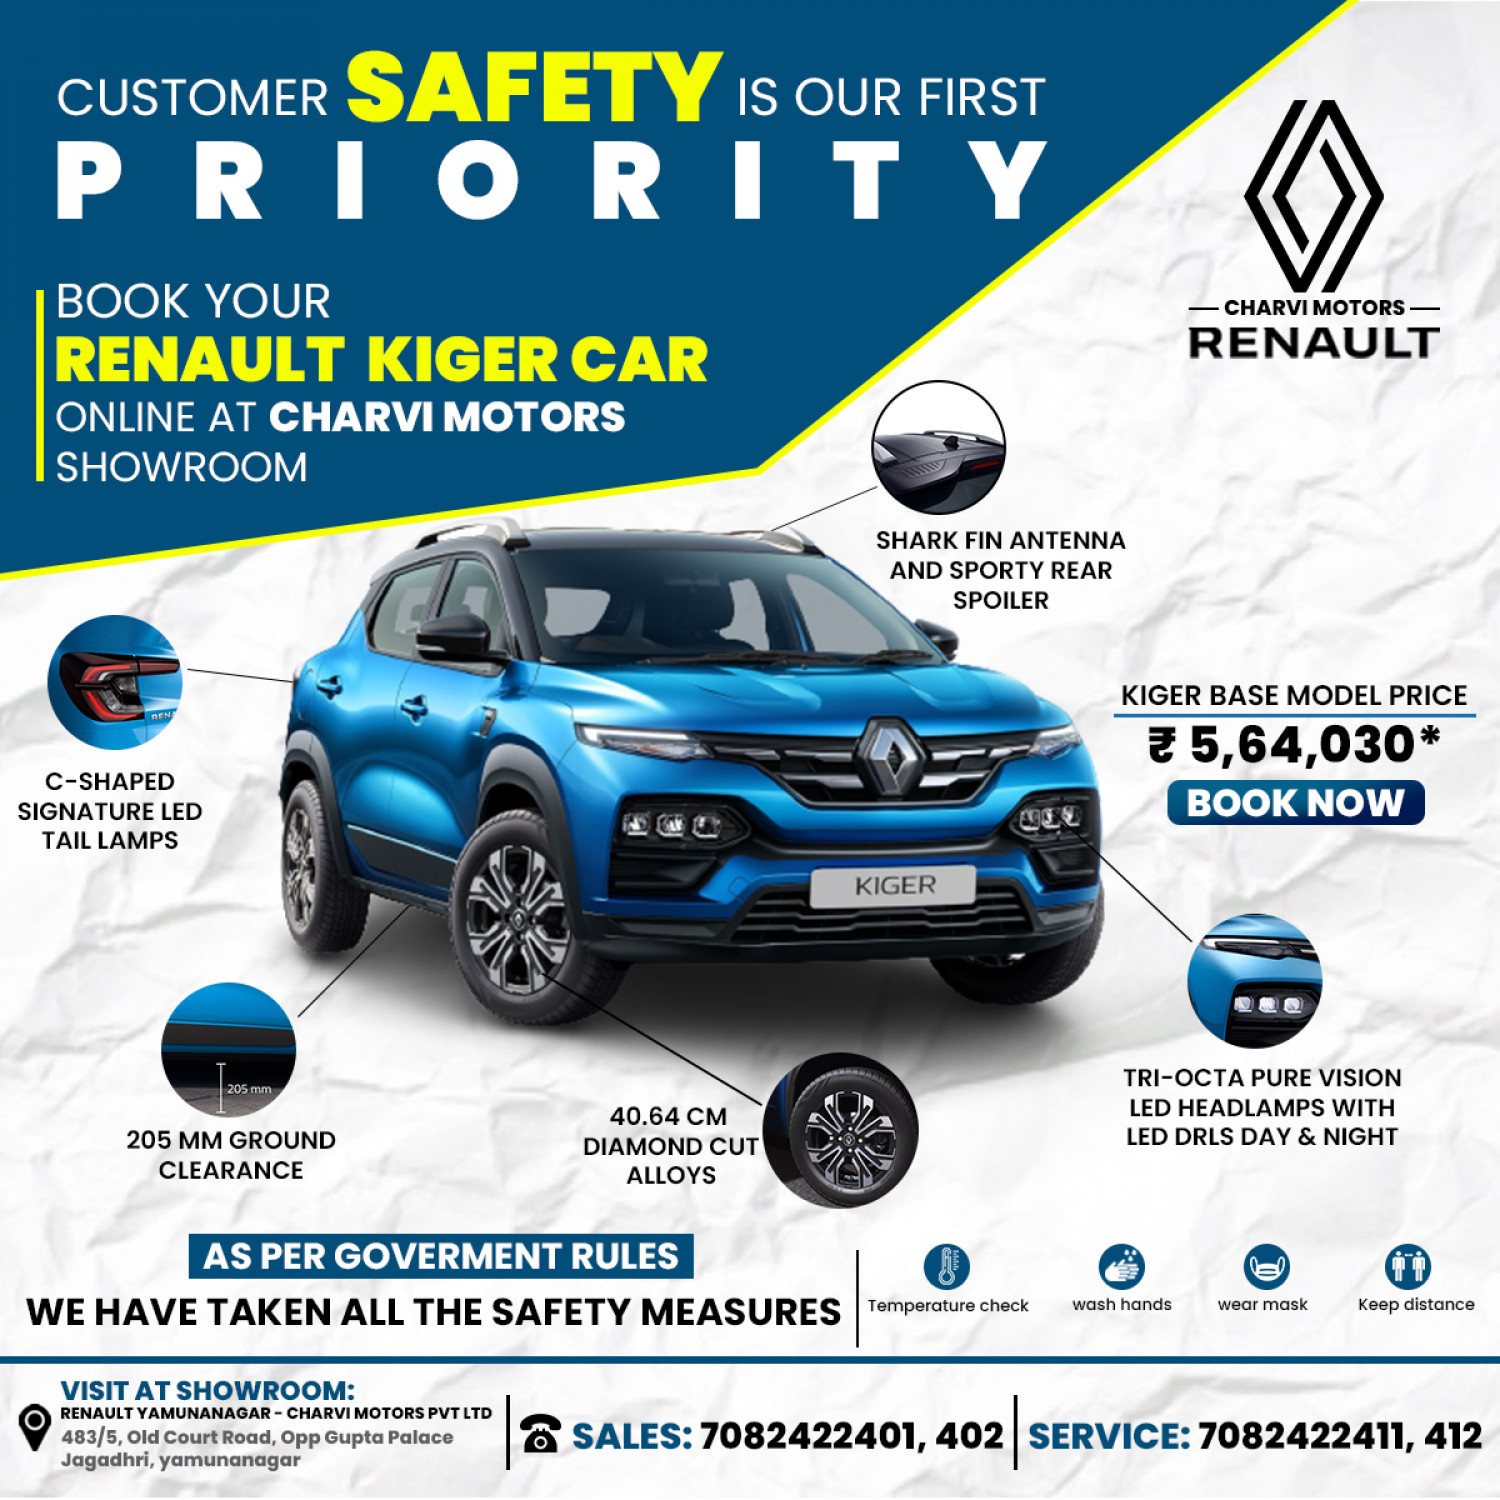 Book your Renault Kiger car online at Charvi Motors showroom Infographic